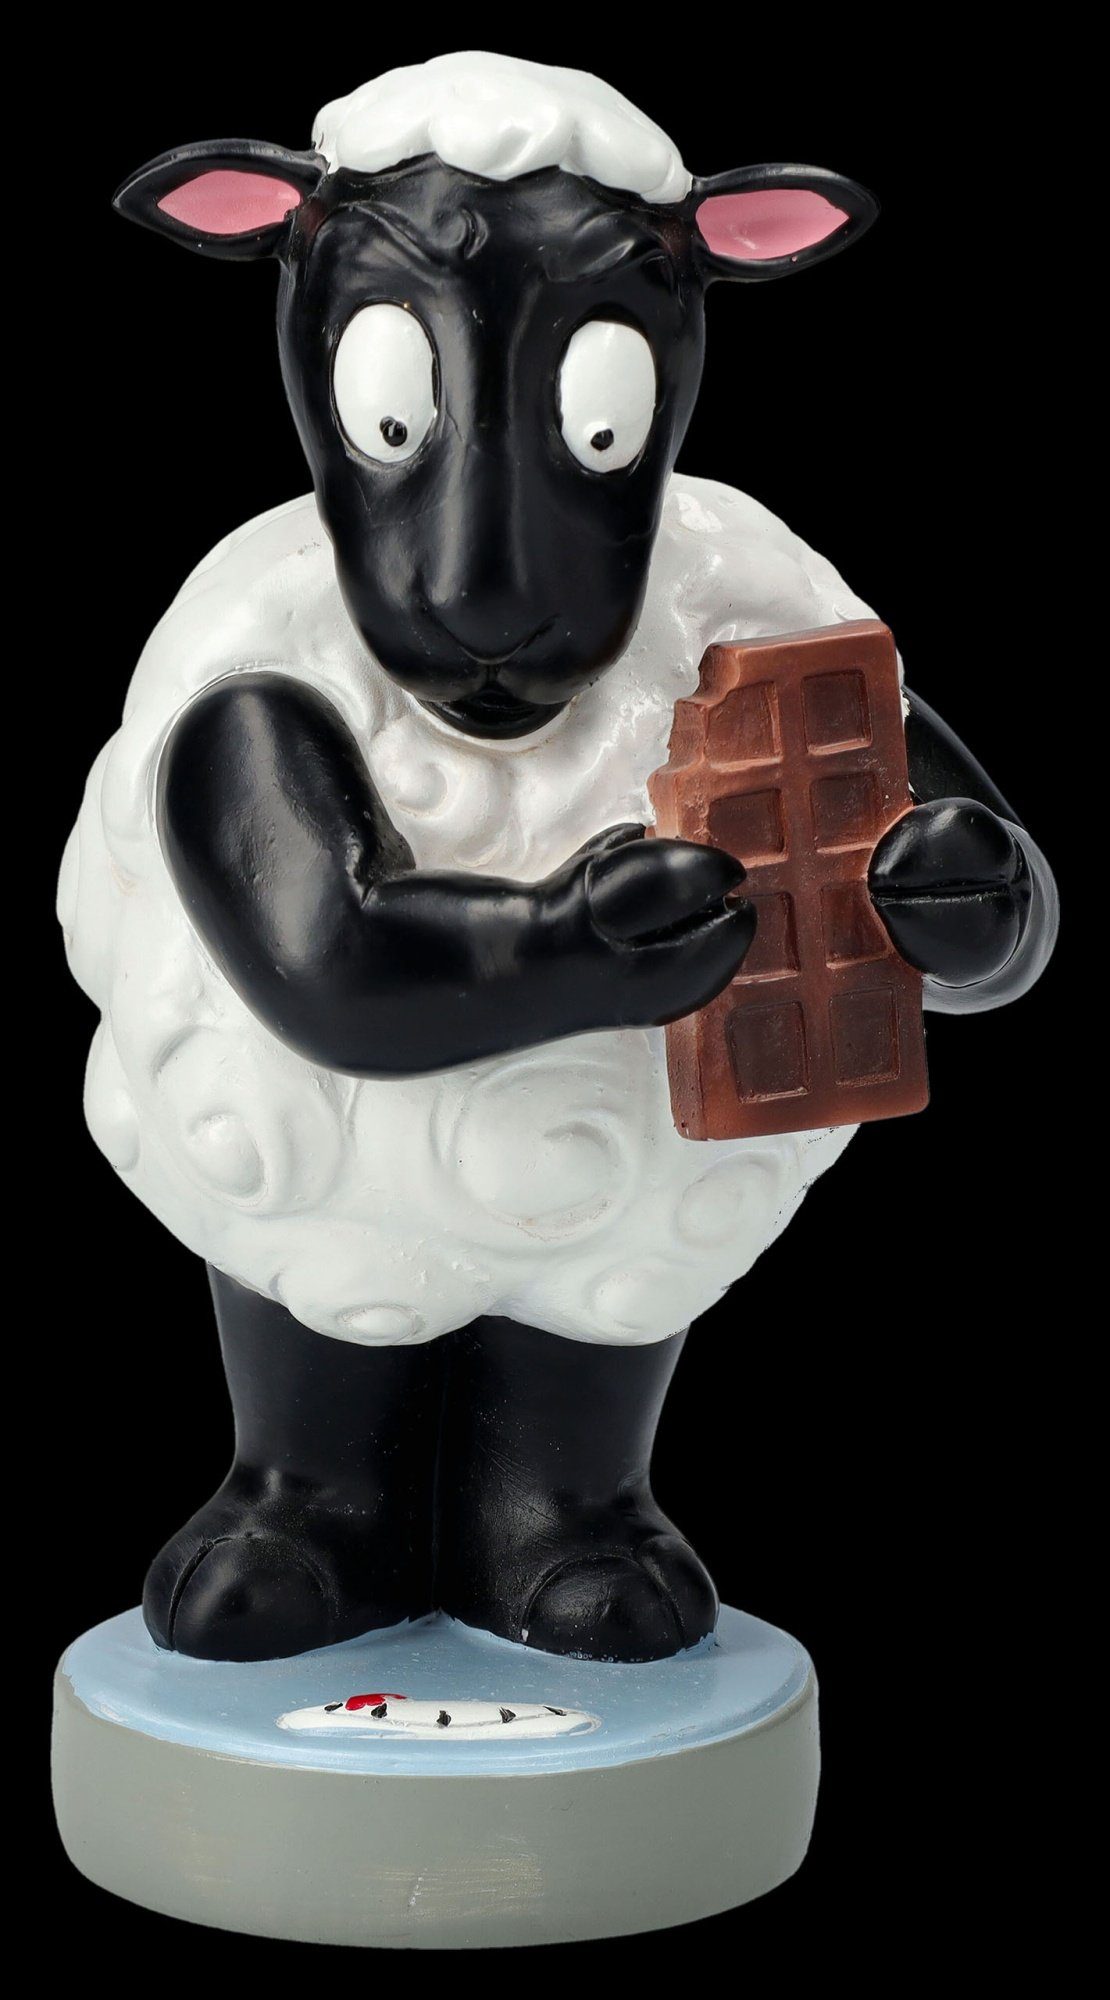 Figuren Shop GmbH Tierfigur Lustige Schaf Figur - Schokolade auf der Waage Spaßige Tierfigur Deko | Tierfiguren